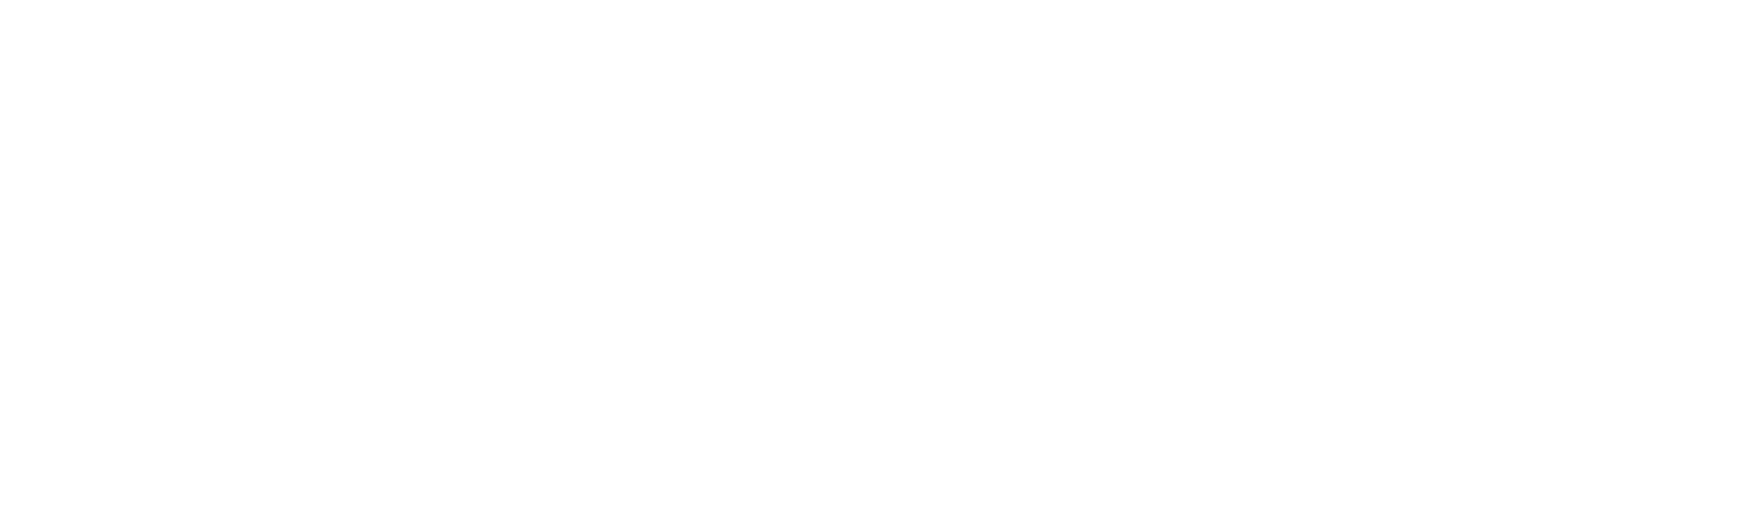 nextbike business